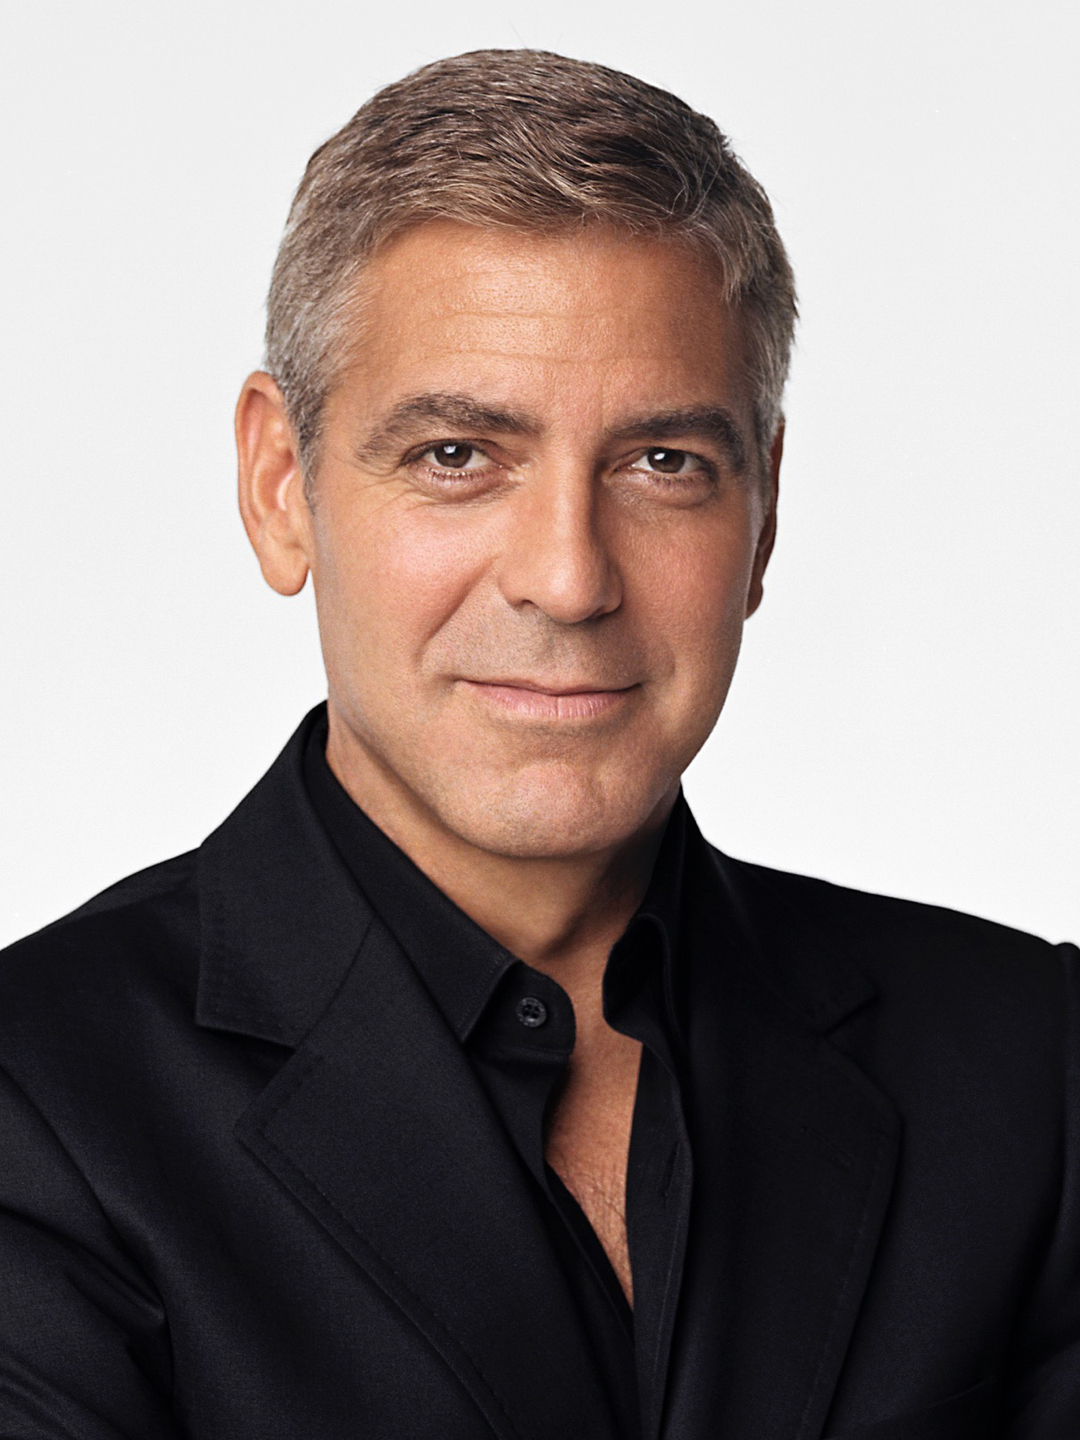 George Clooney main achievements